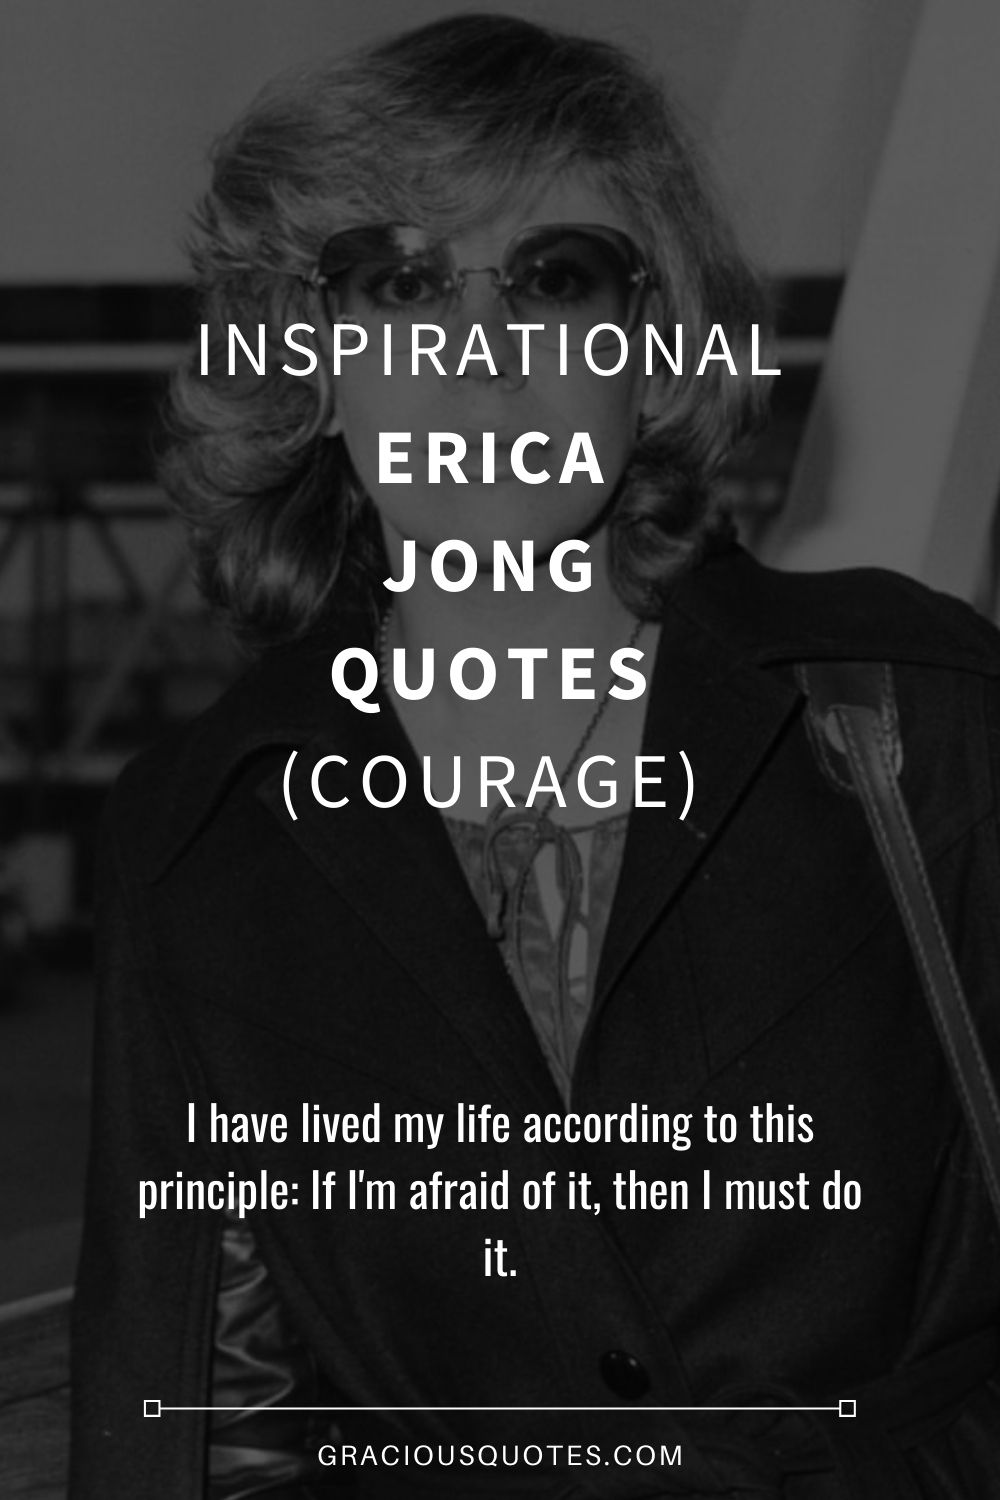 Inspirational Erica Jong Quotes (COURAGE) - Gracious Quotes